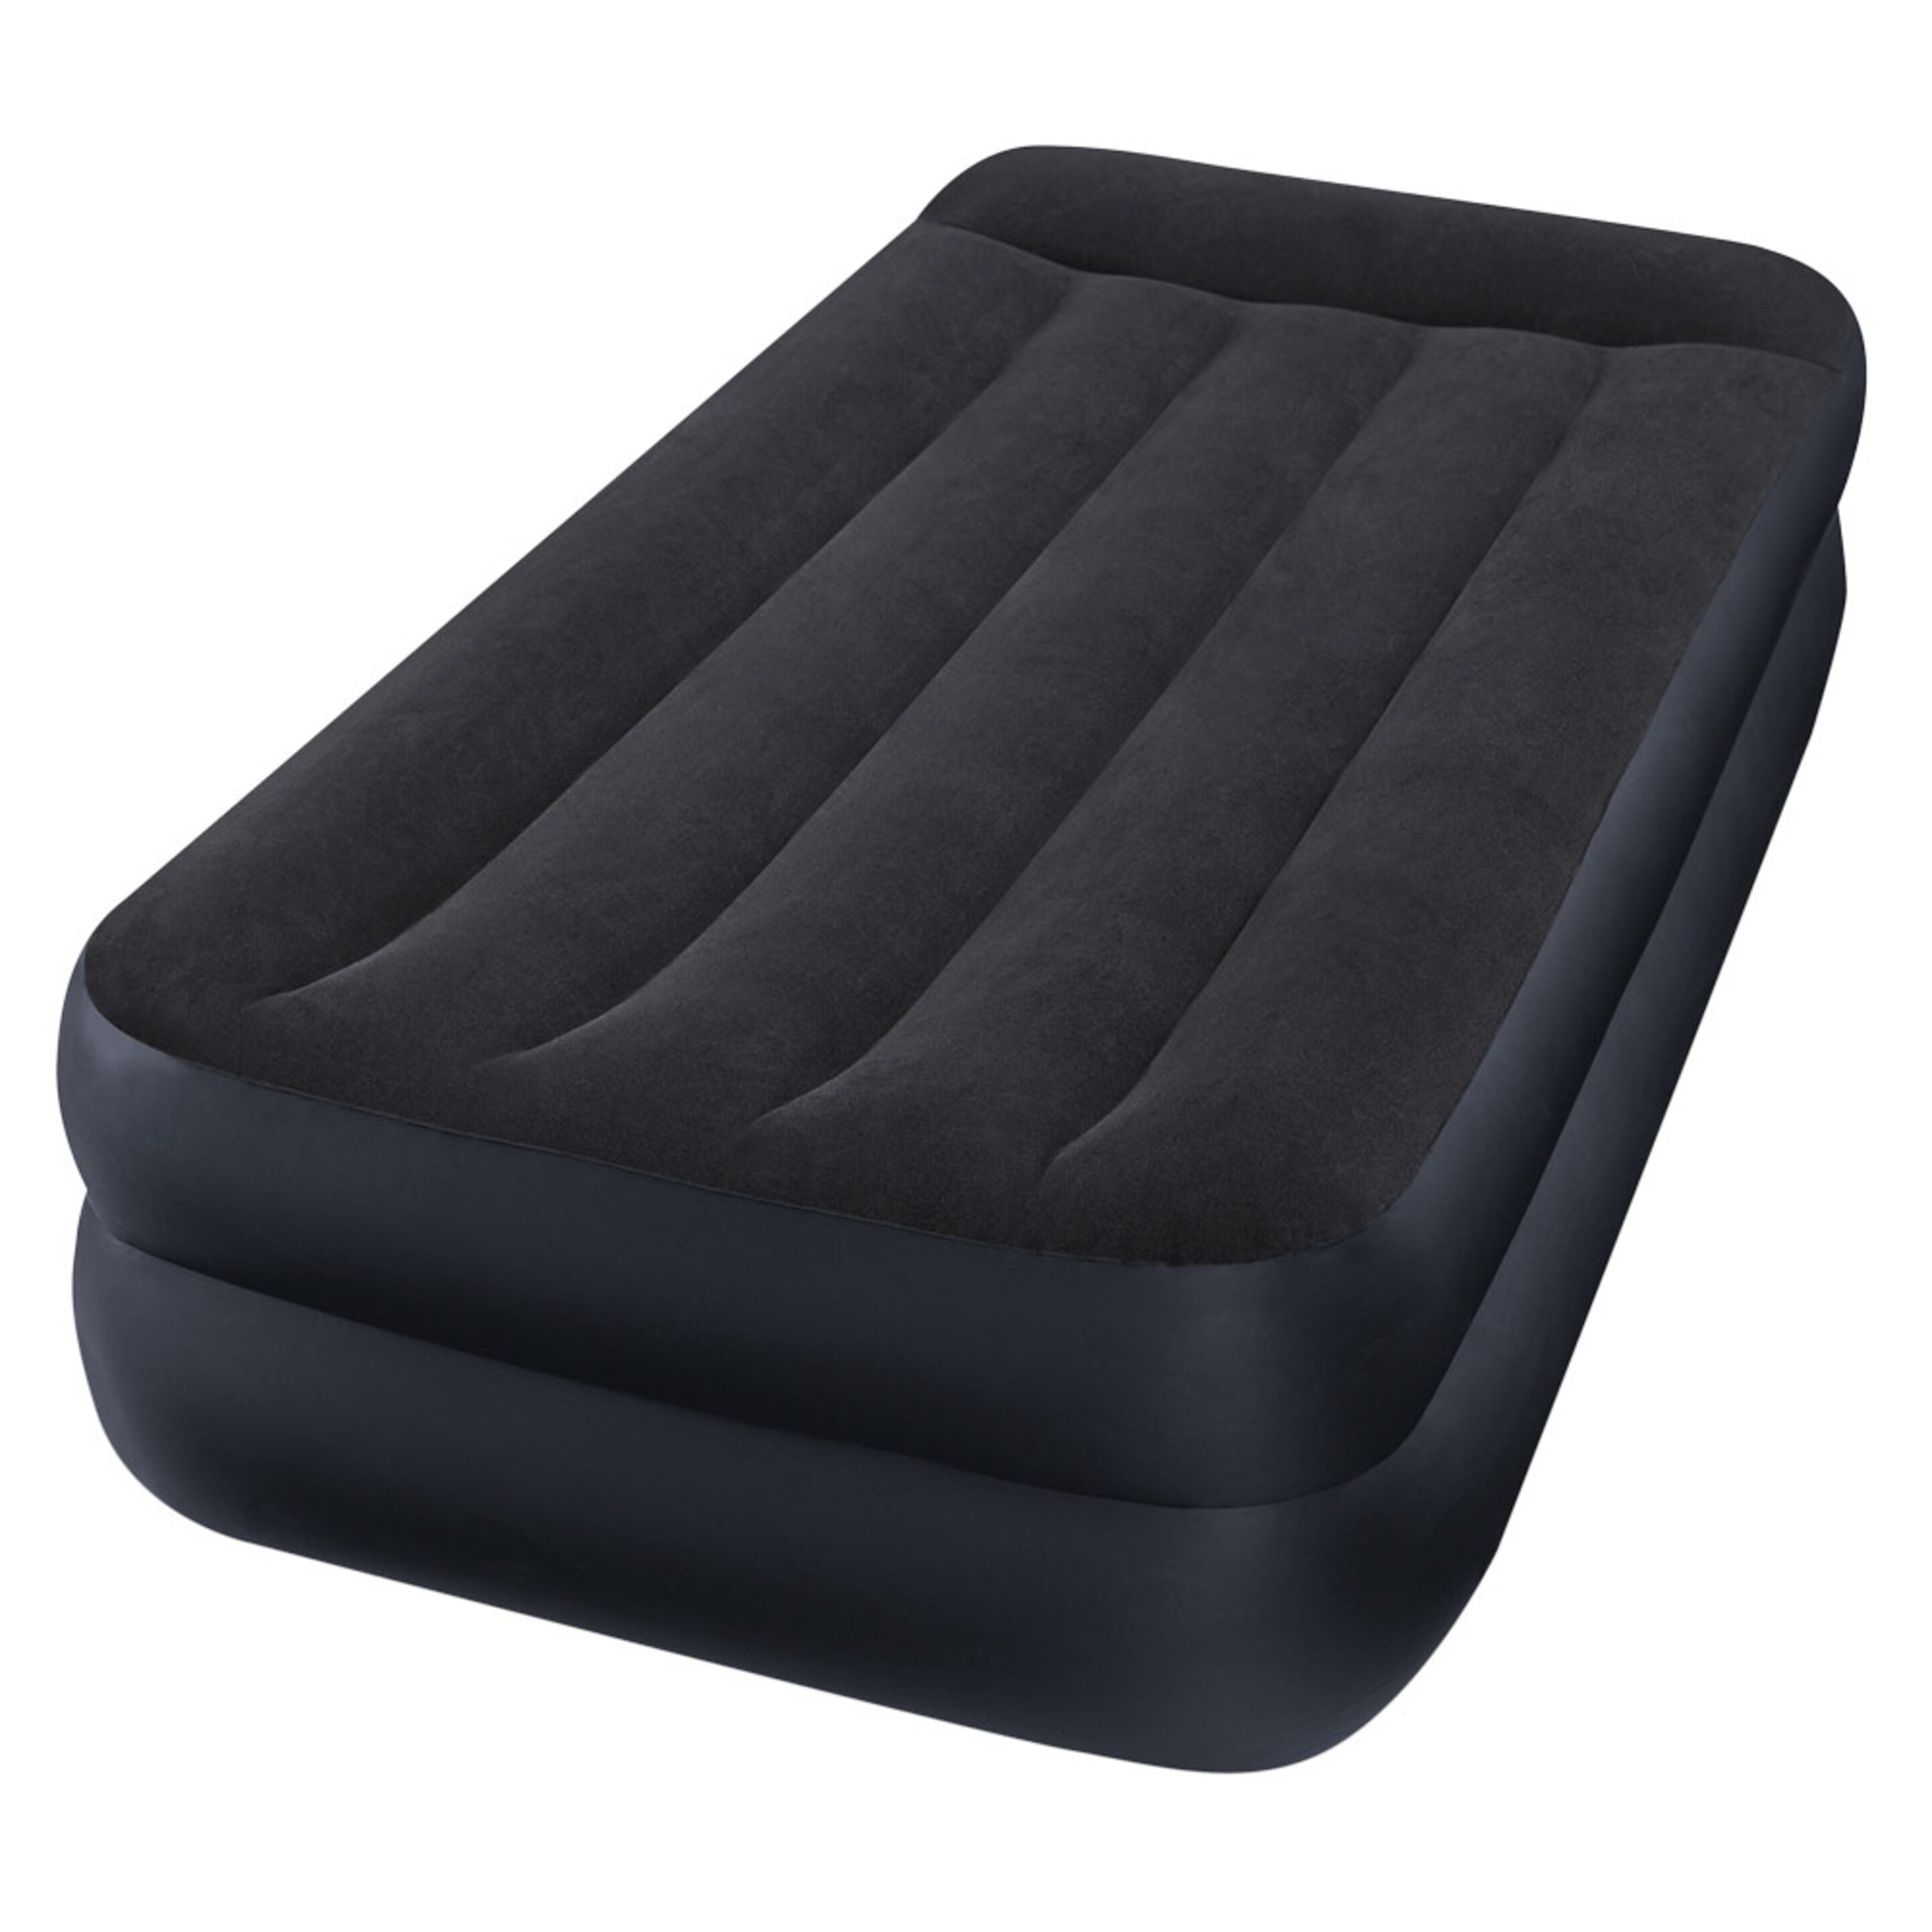 Colchón Hinchable Intex Dura-beam Plus Pillow Rest - 99x191x42 Cm - negro - 